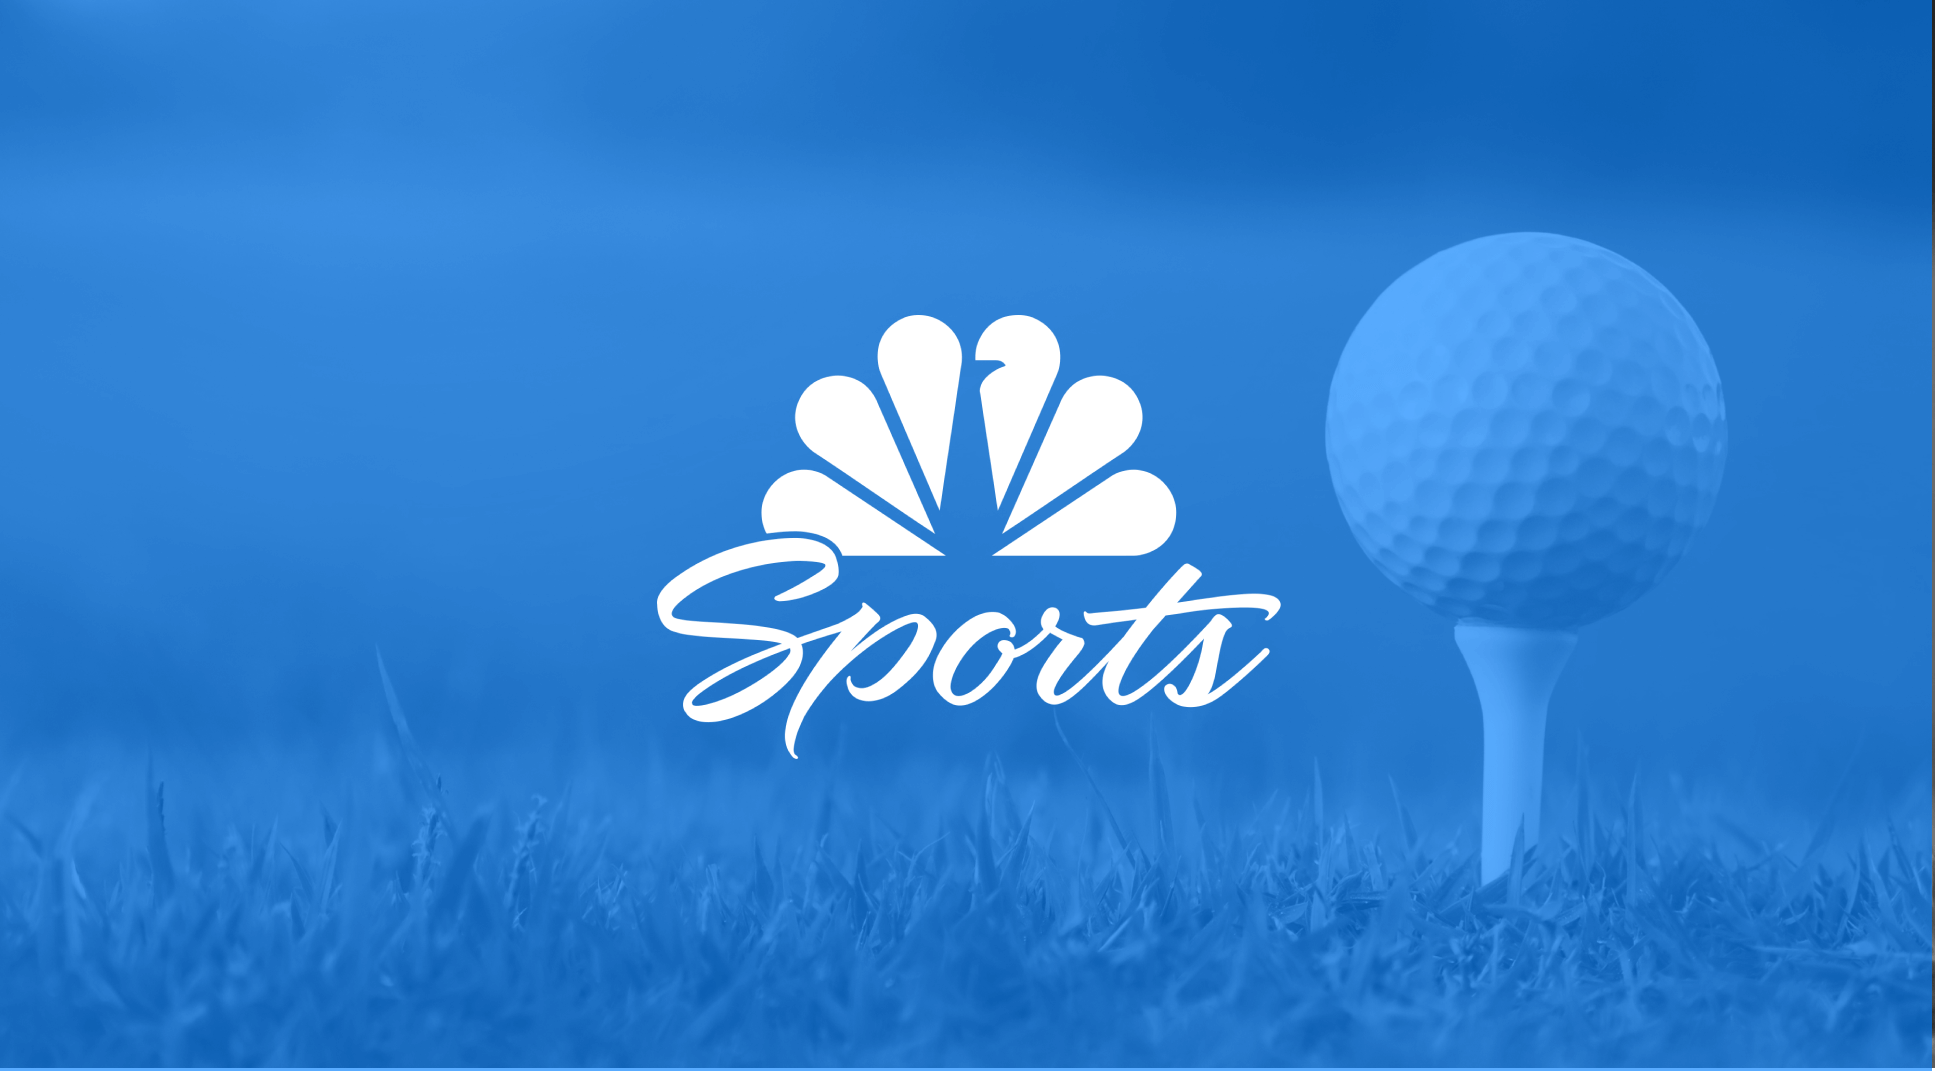 Customer - NBC Sports (1)